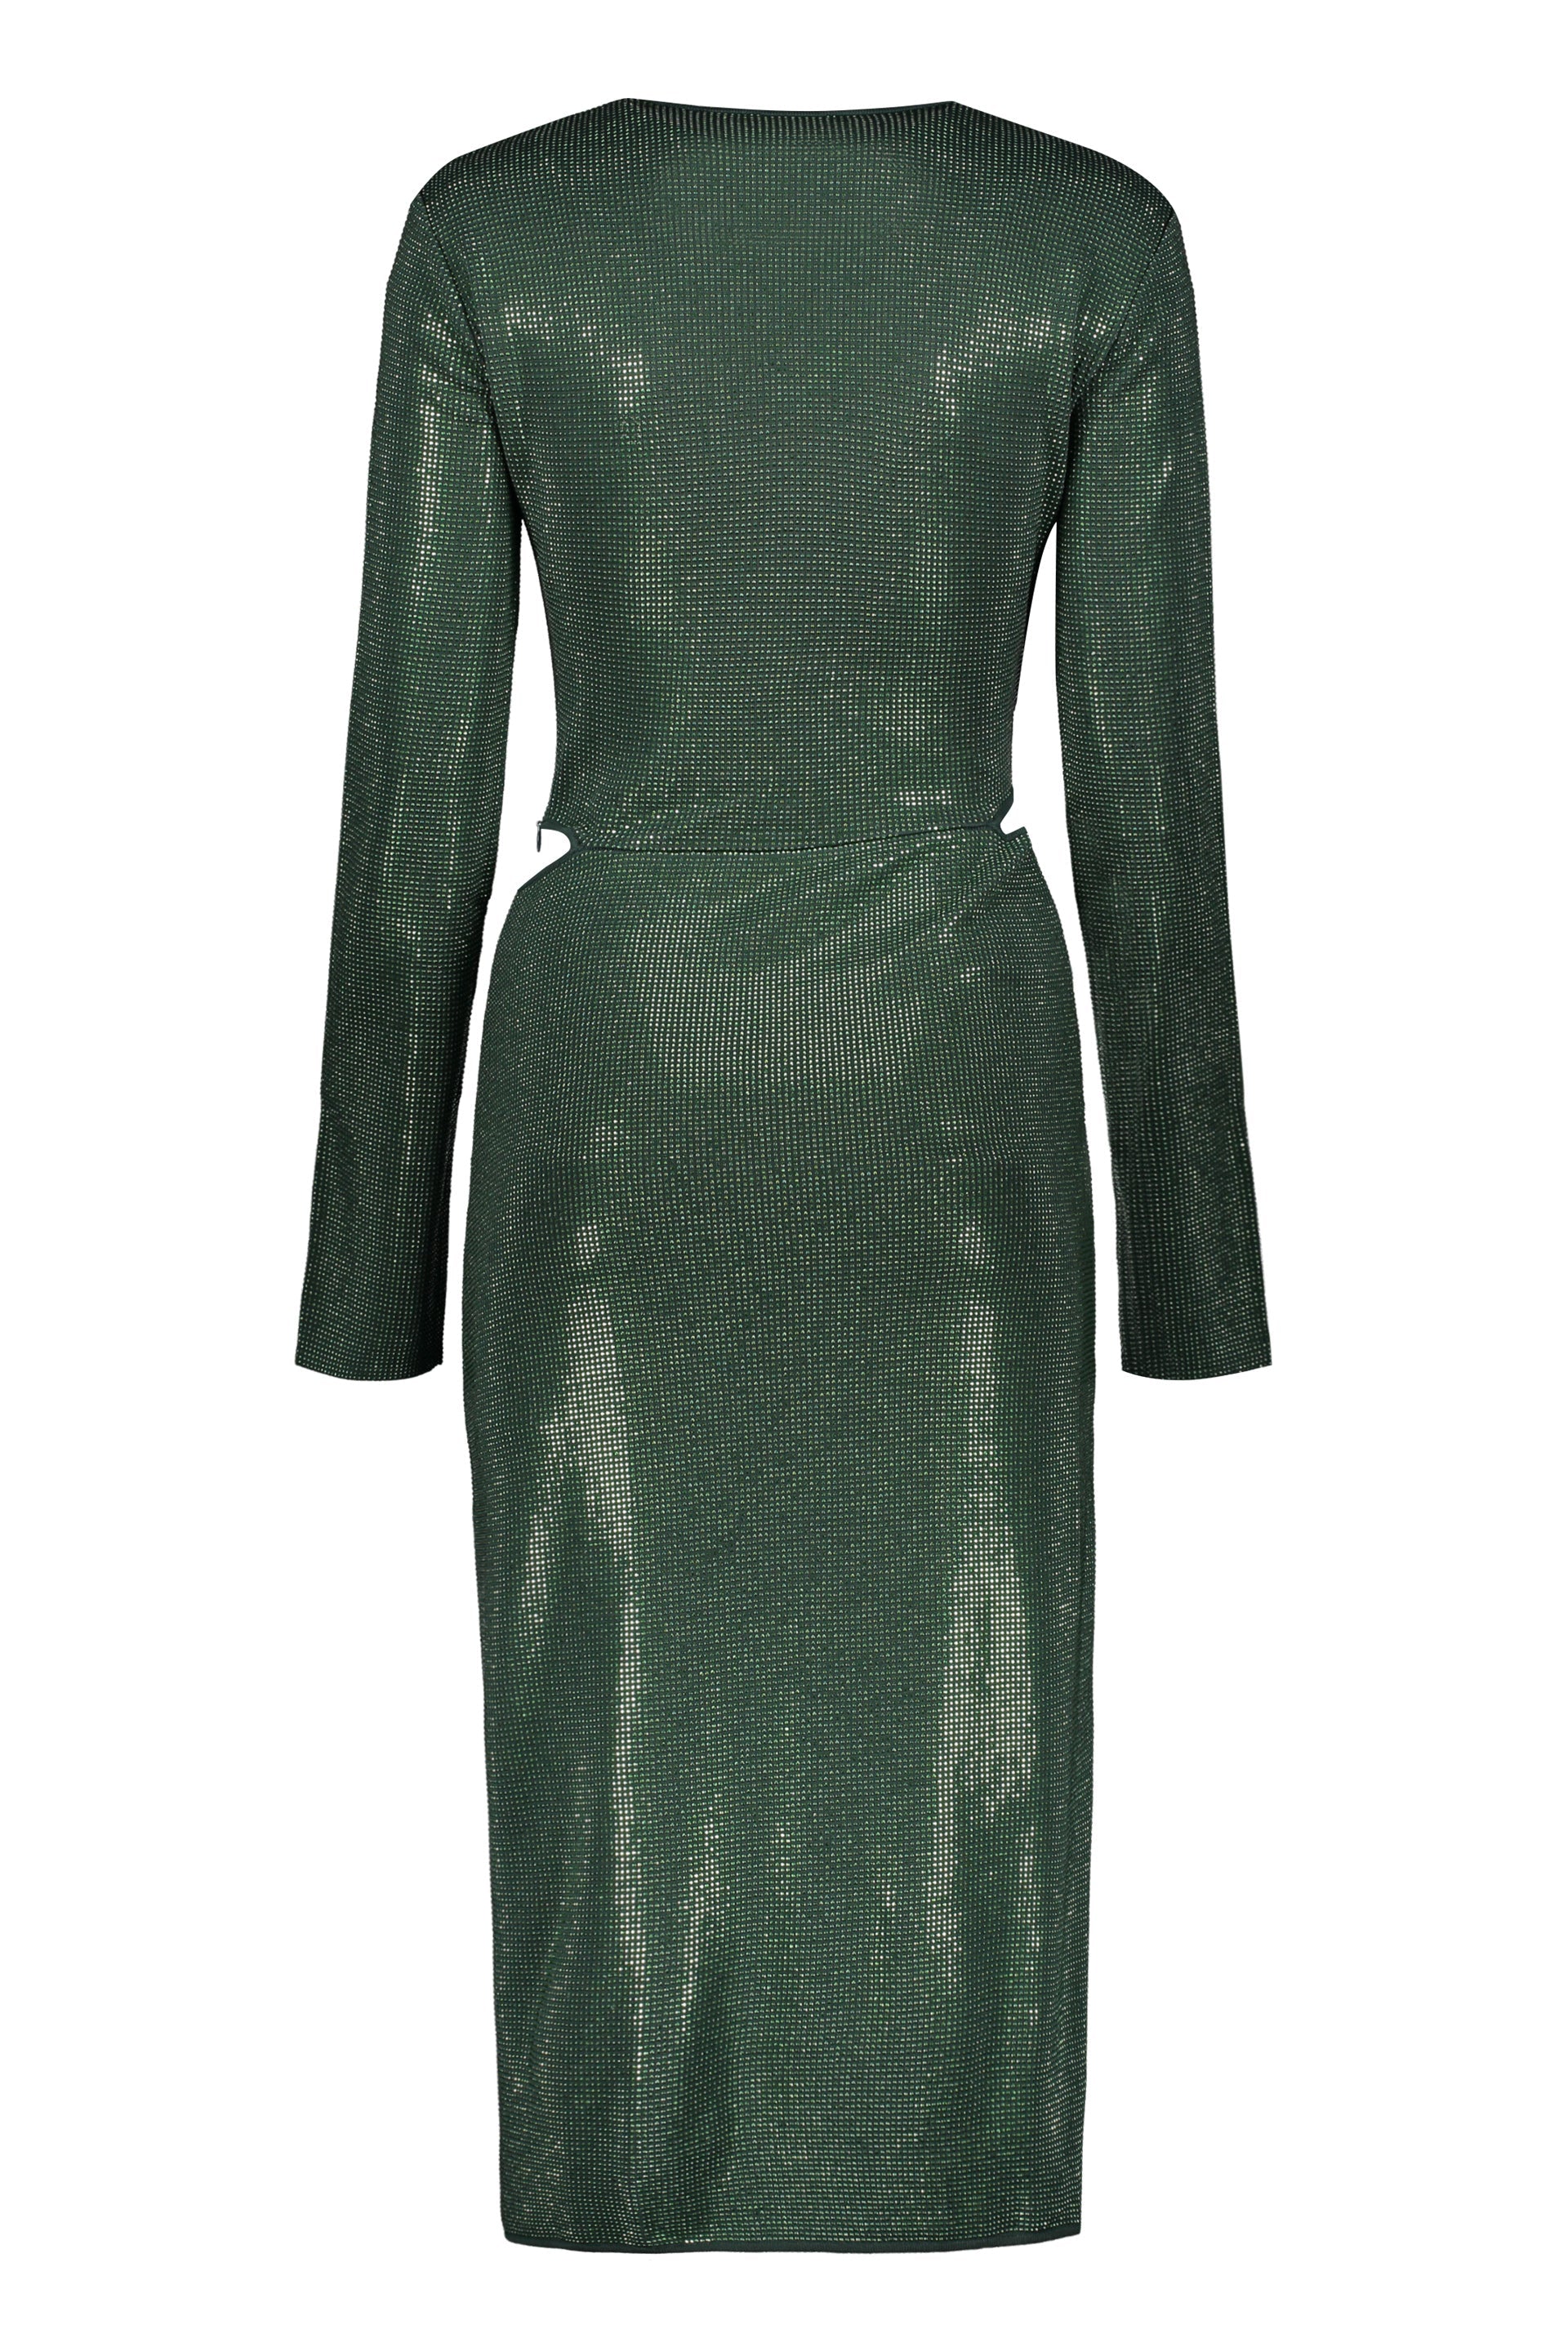 Rhinestone dress-Bottega Veneta-OUTLET-SALE-S-ARCHIVIST